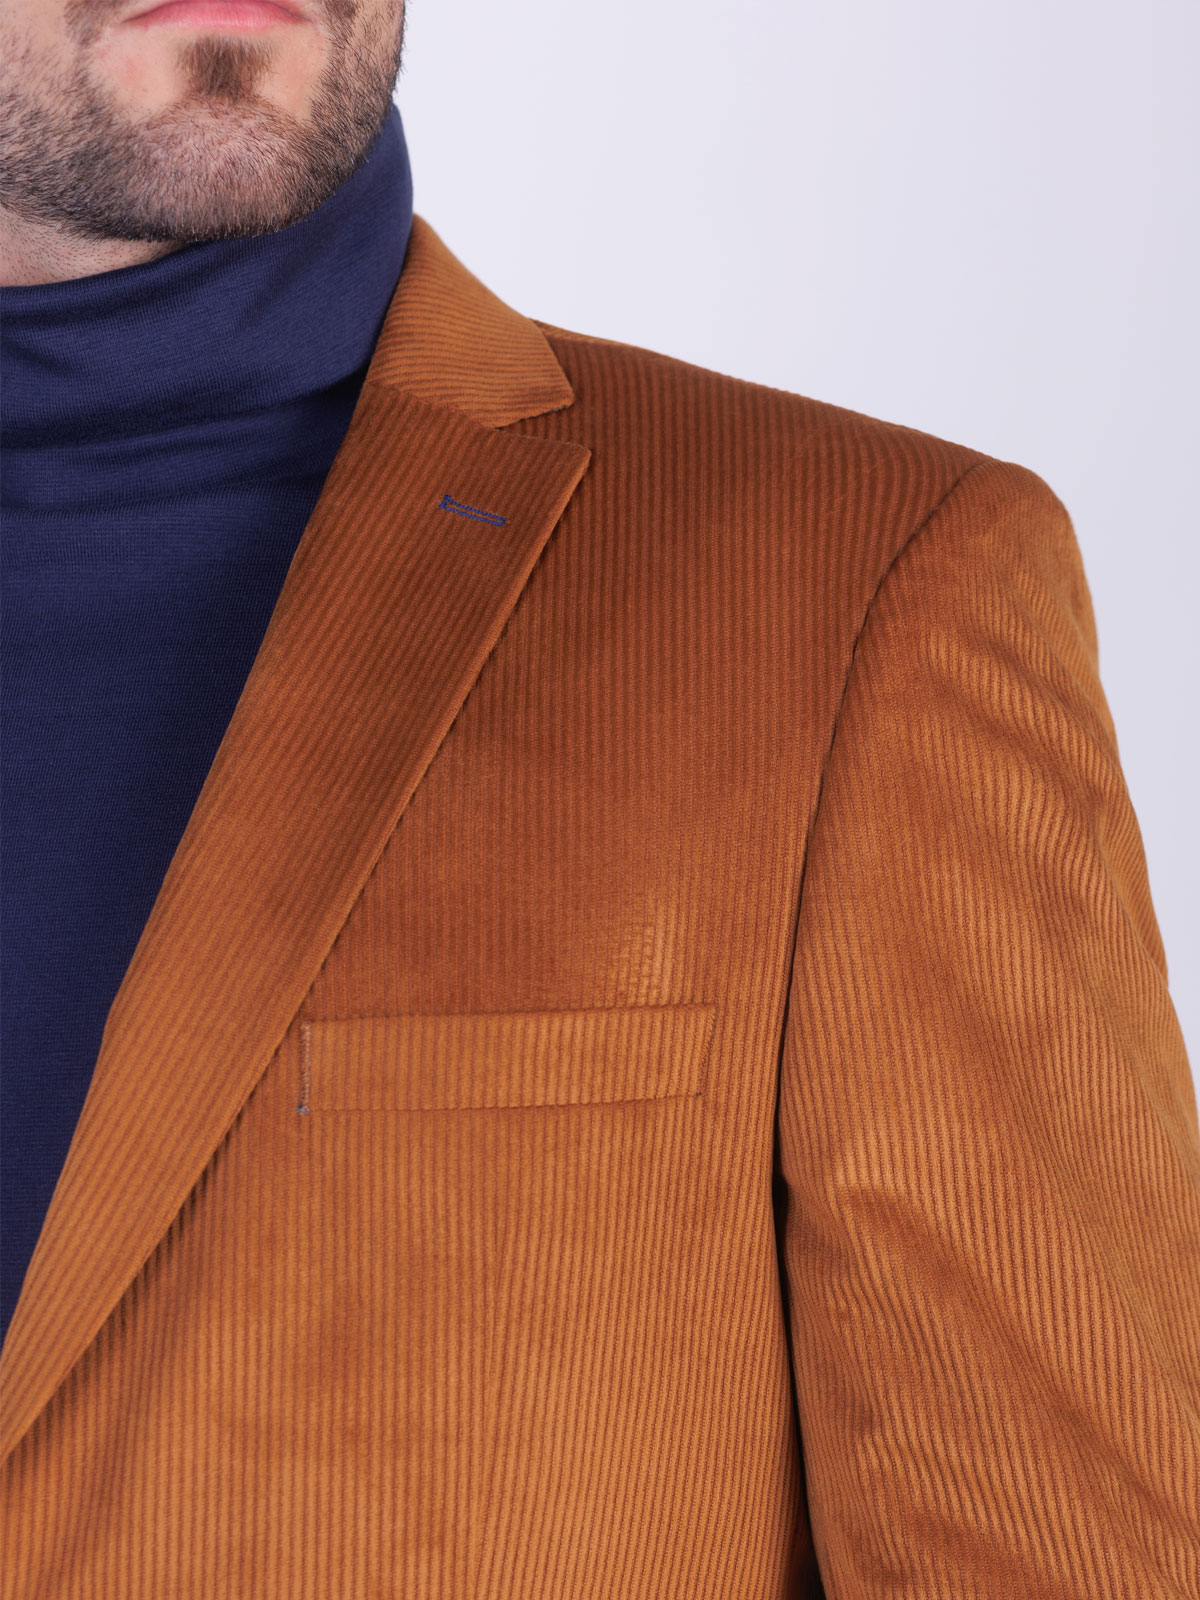 Elegant jacket in mustard color - 61100 € 83.80 img3